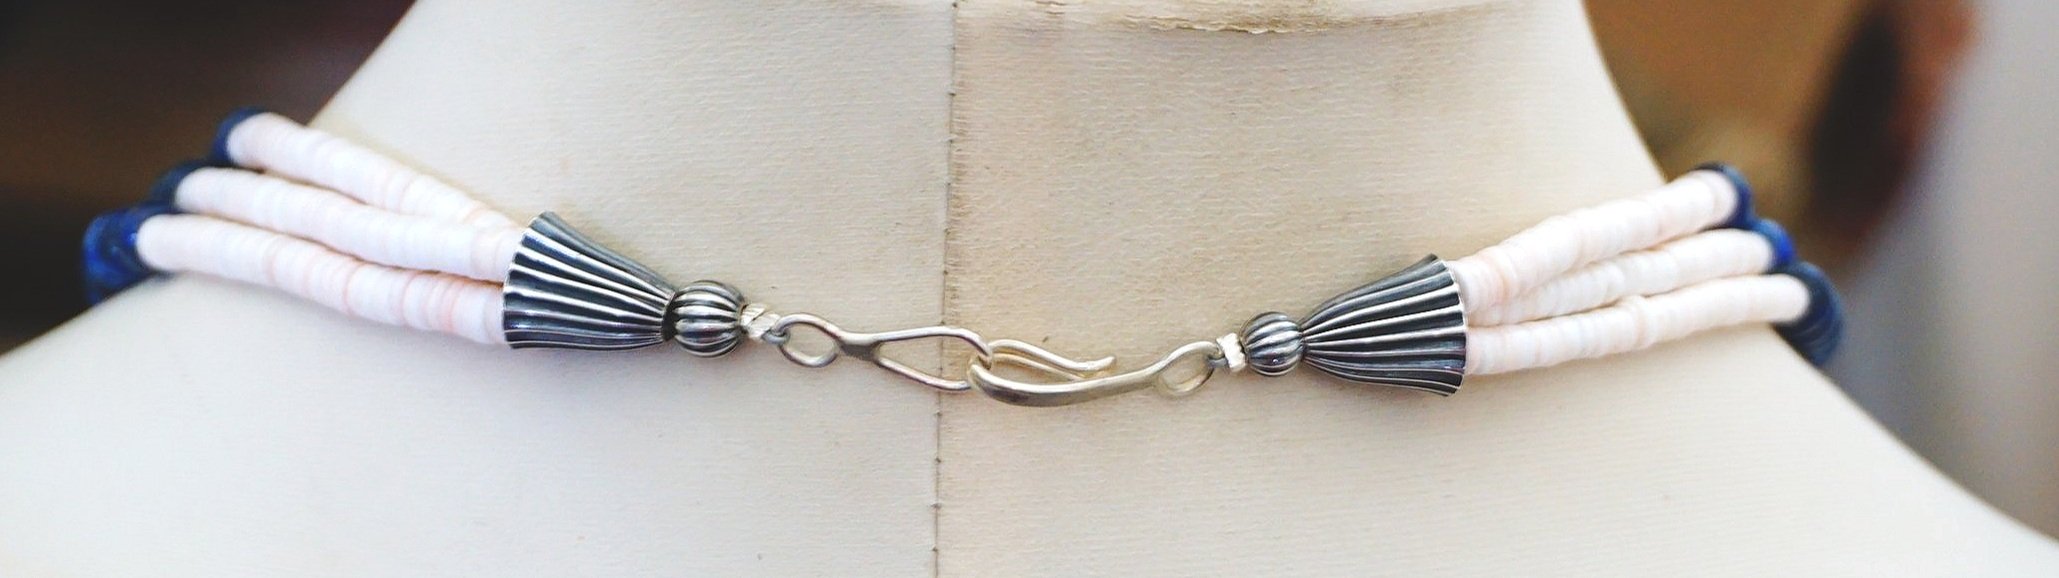 Cro-Magnon Shell Bead Necklace | The Smithsonian Institution's Human  Origins Program